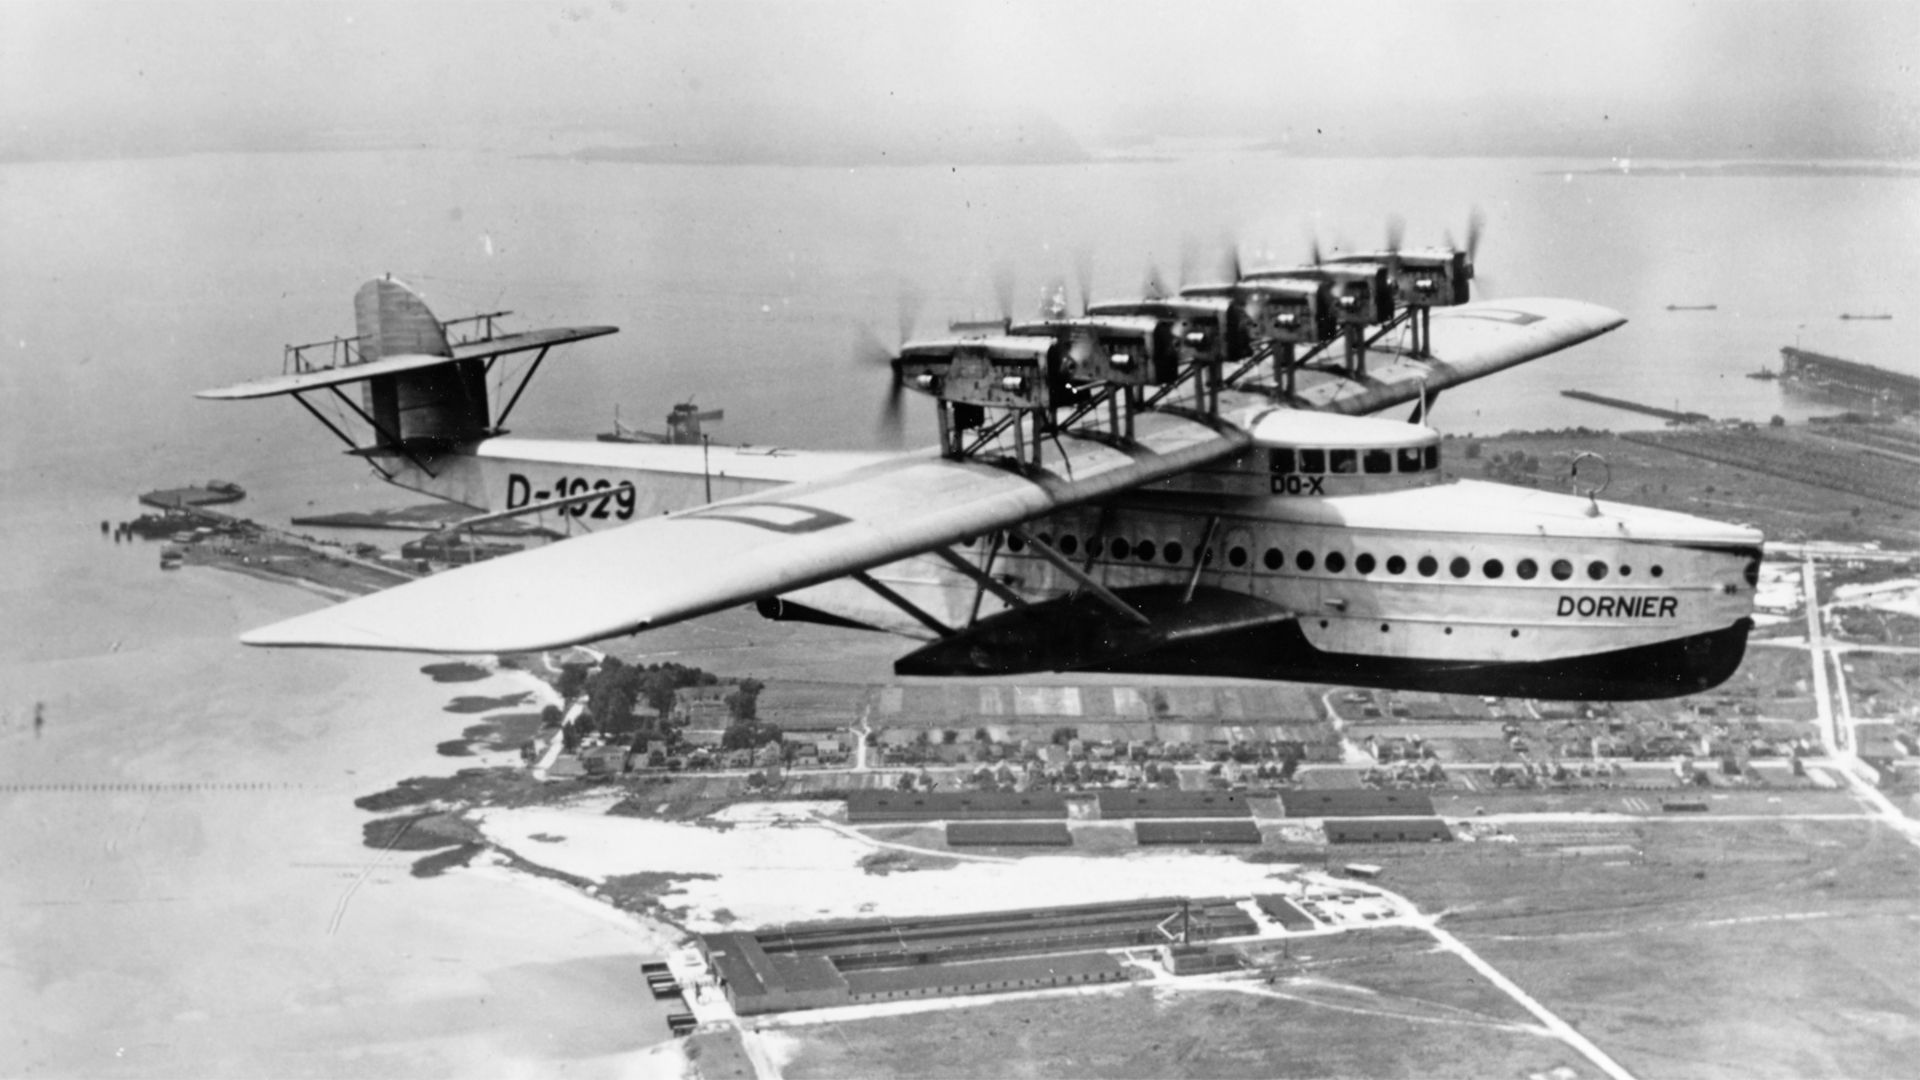 Dornier Flugzeugwerke